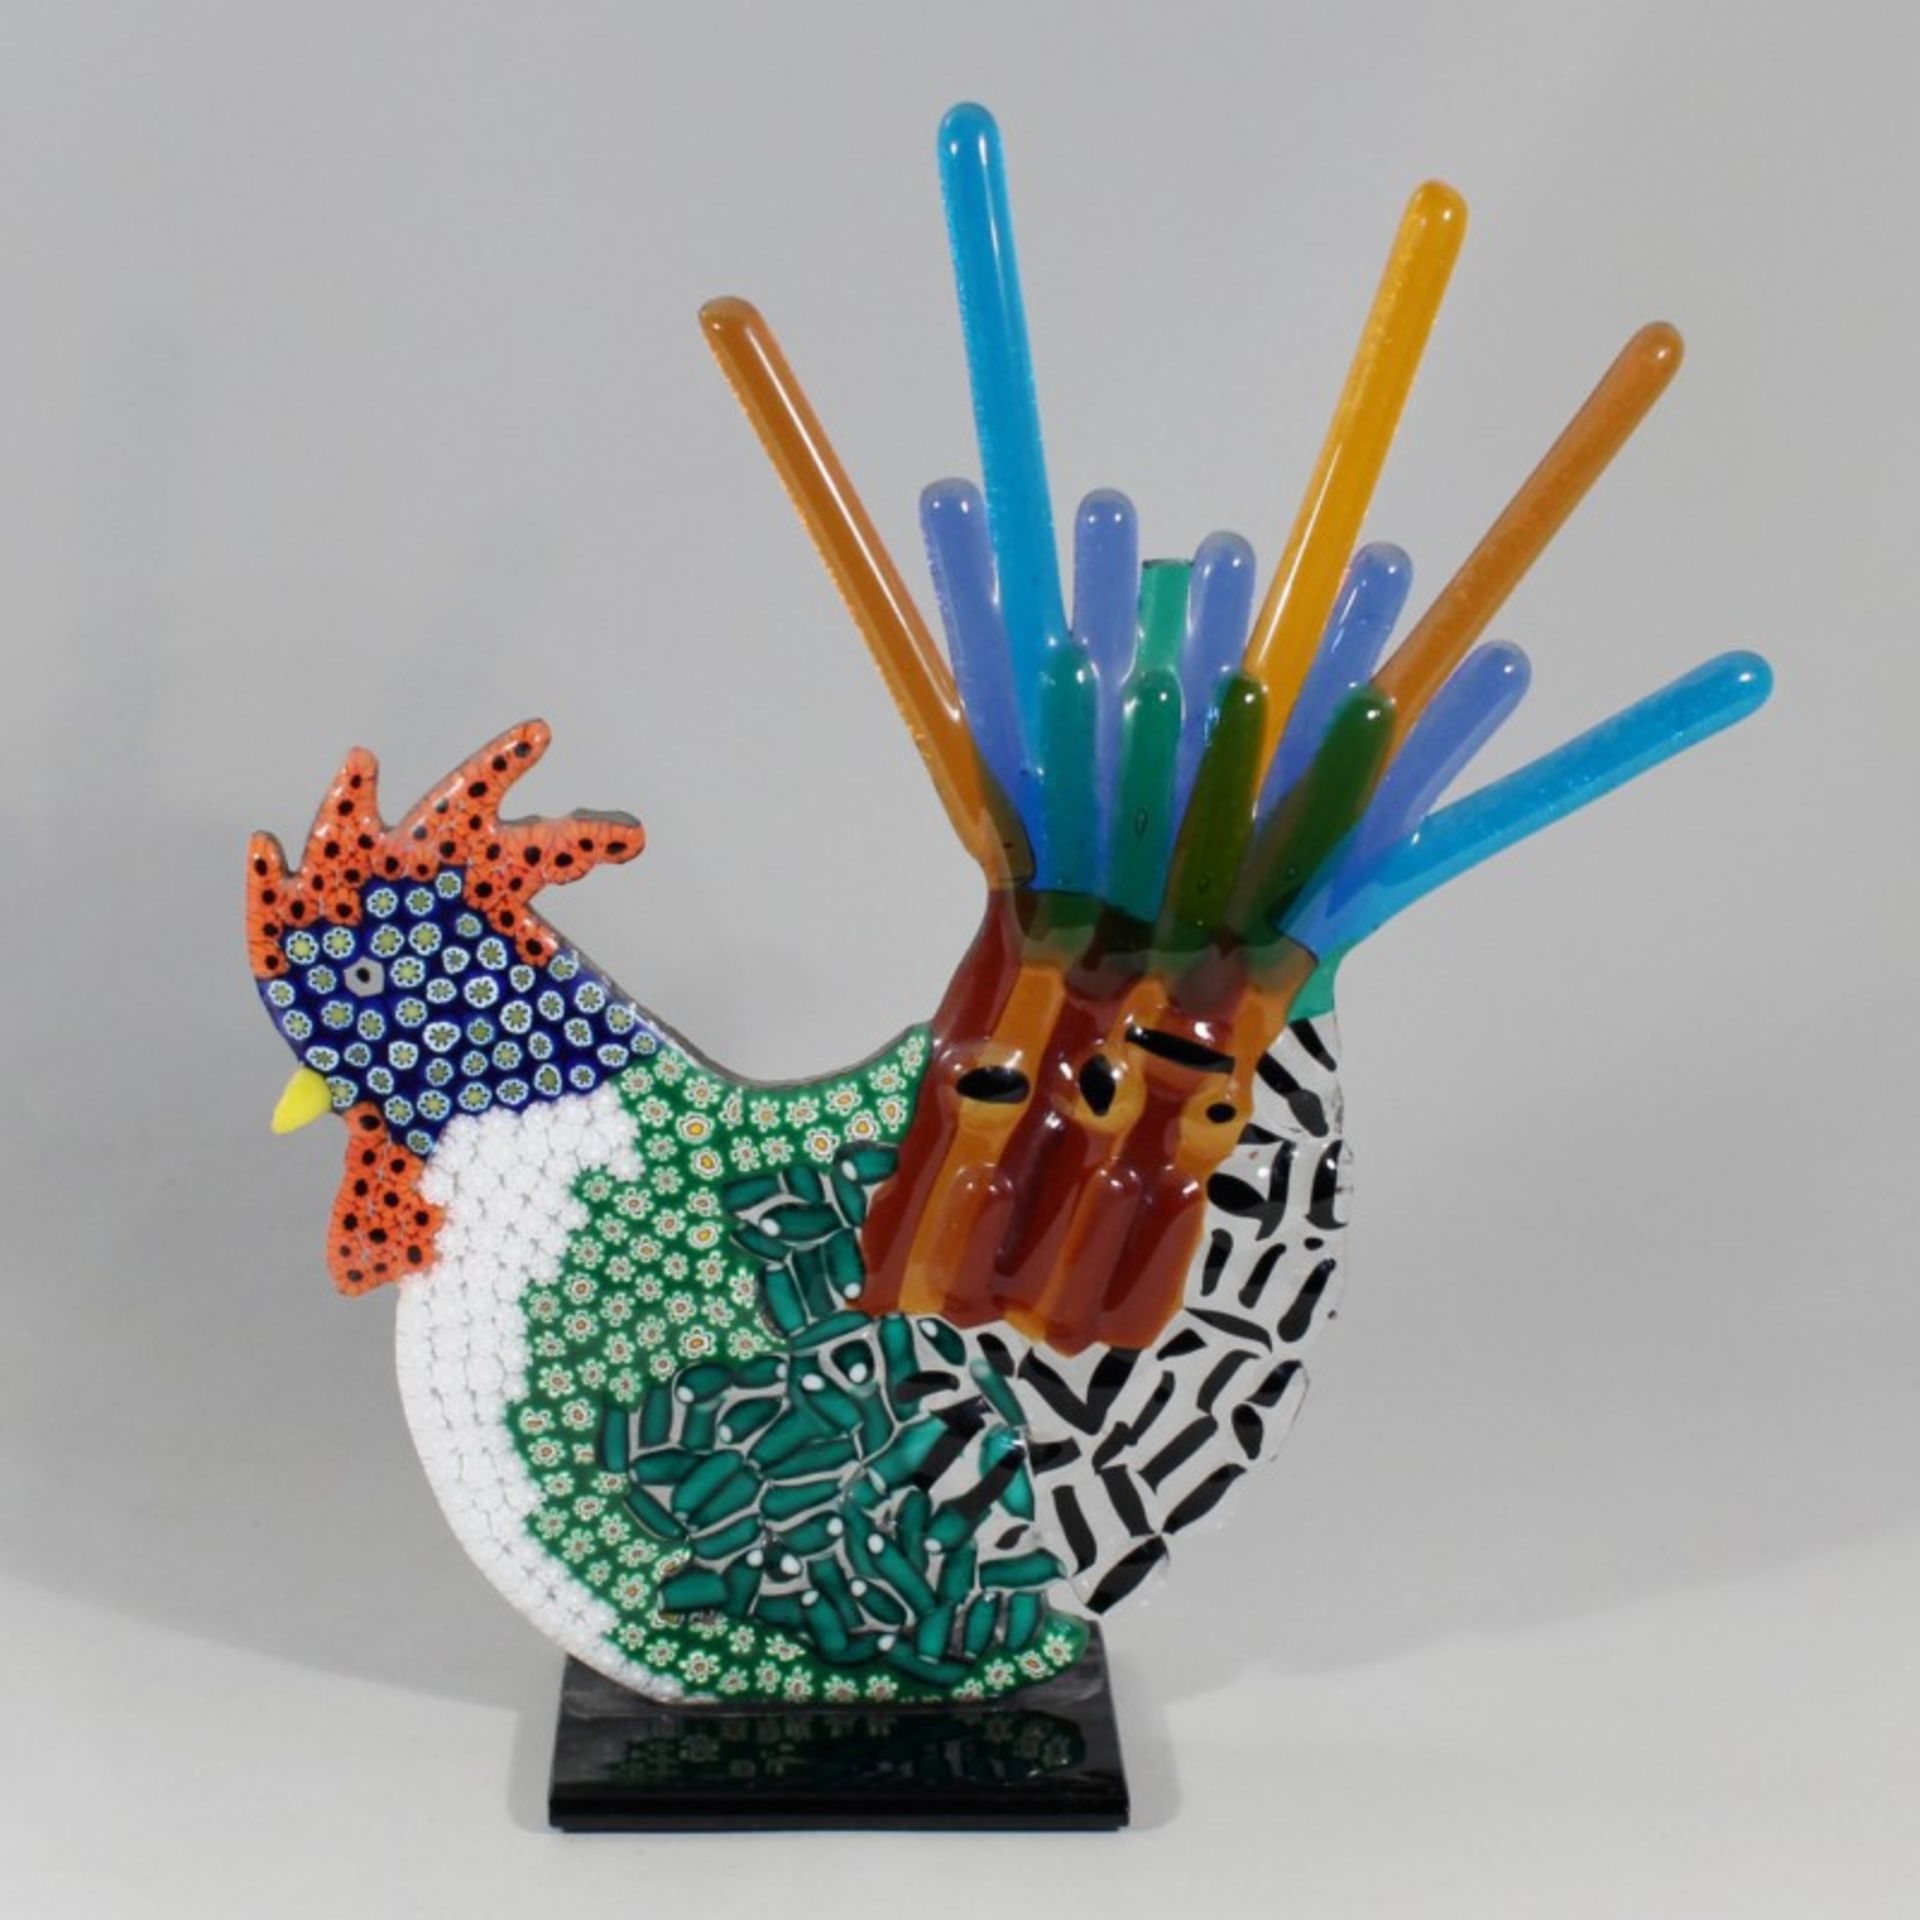 Murano - DekorationsobjektItalien, zweidimensioale Darstellung eines Hahns, farbloses u. polychromes